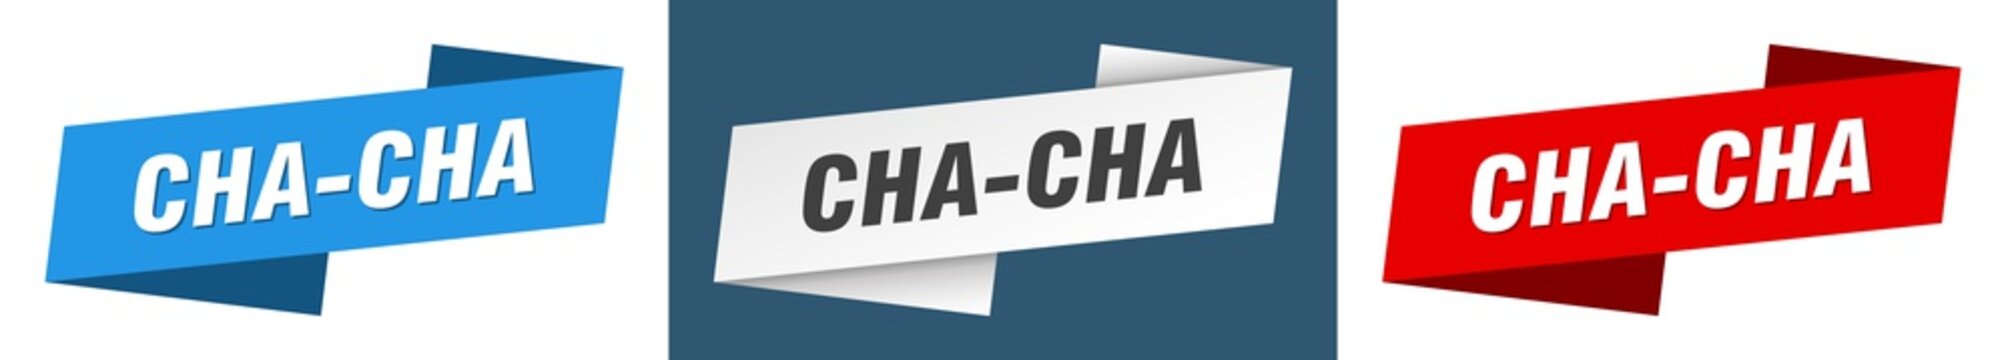 cha-cha banner. cha-cha ribbon label sign set